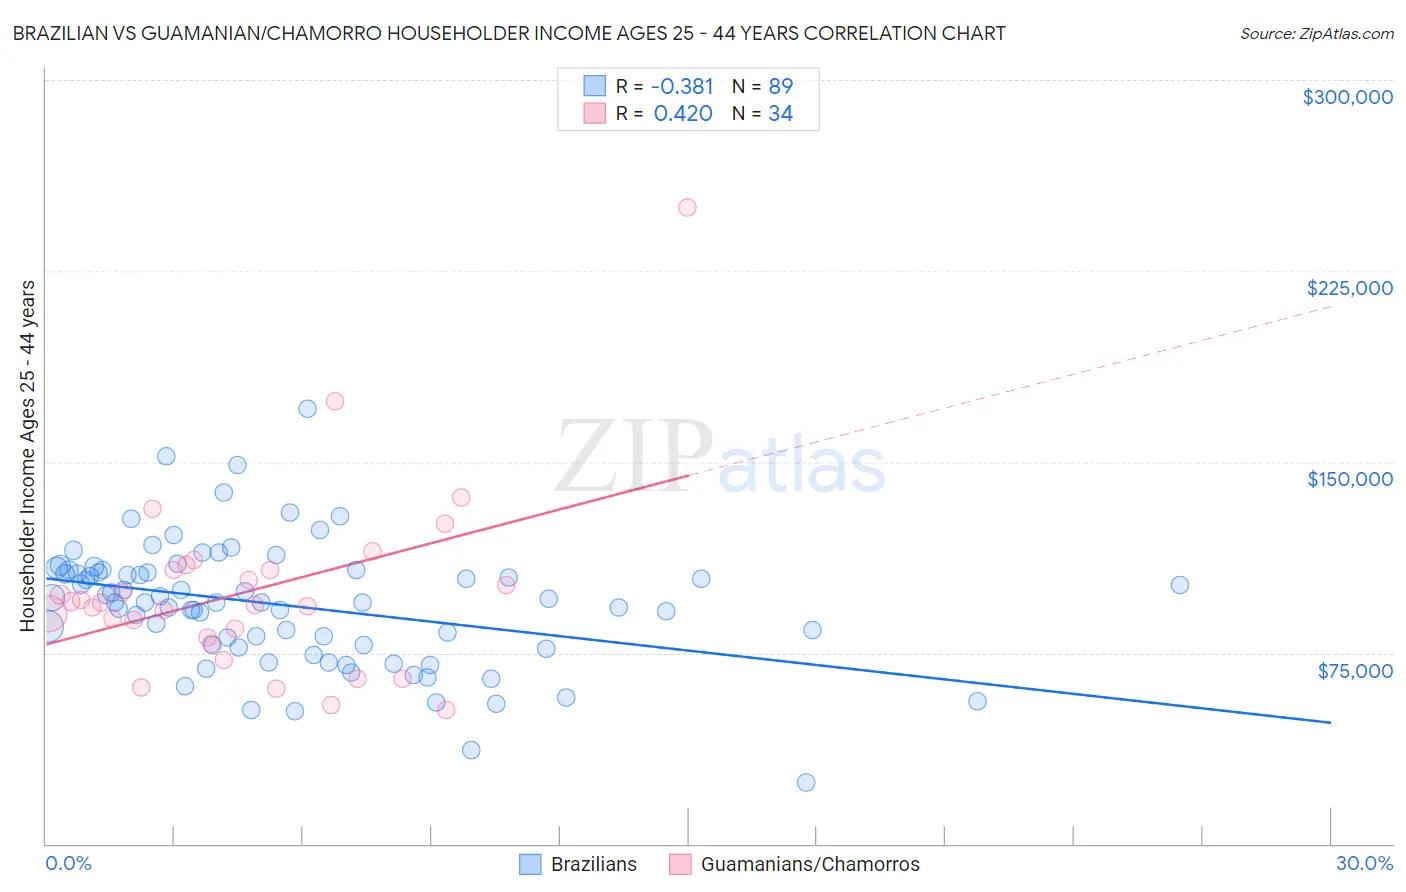 Brazilian vs Guamanian/Chamorro Householder Income Ages 25 - 44 years